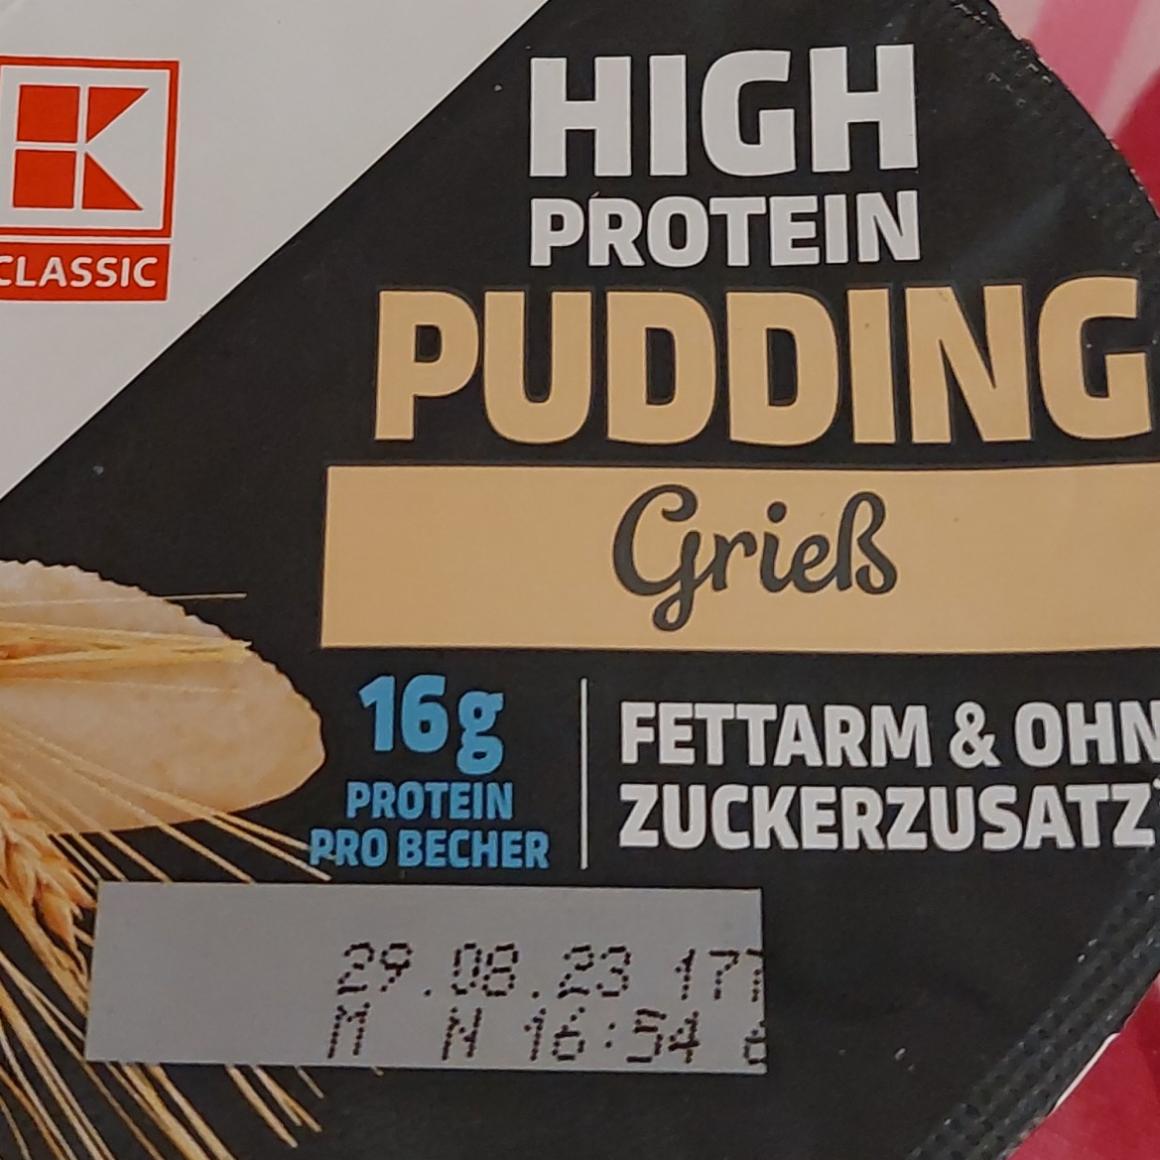 Képek - High protein Grieß puding K-Classic